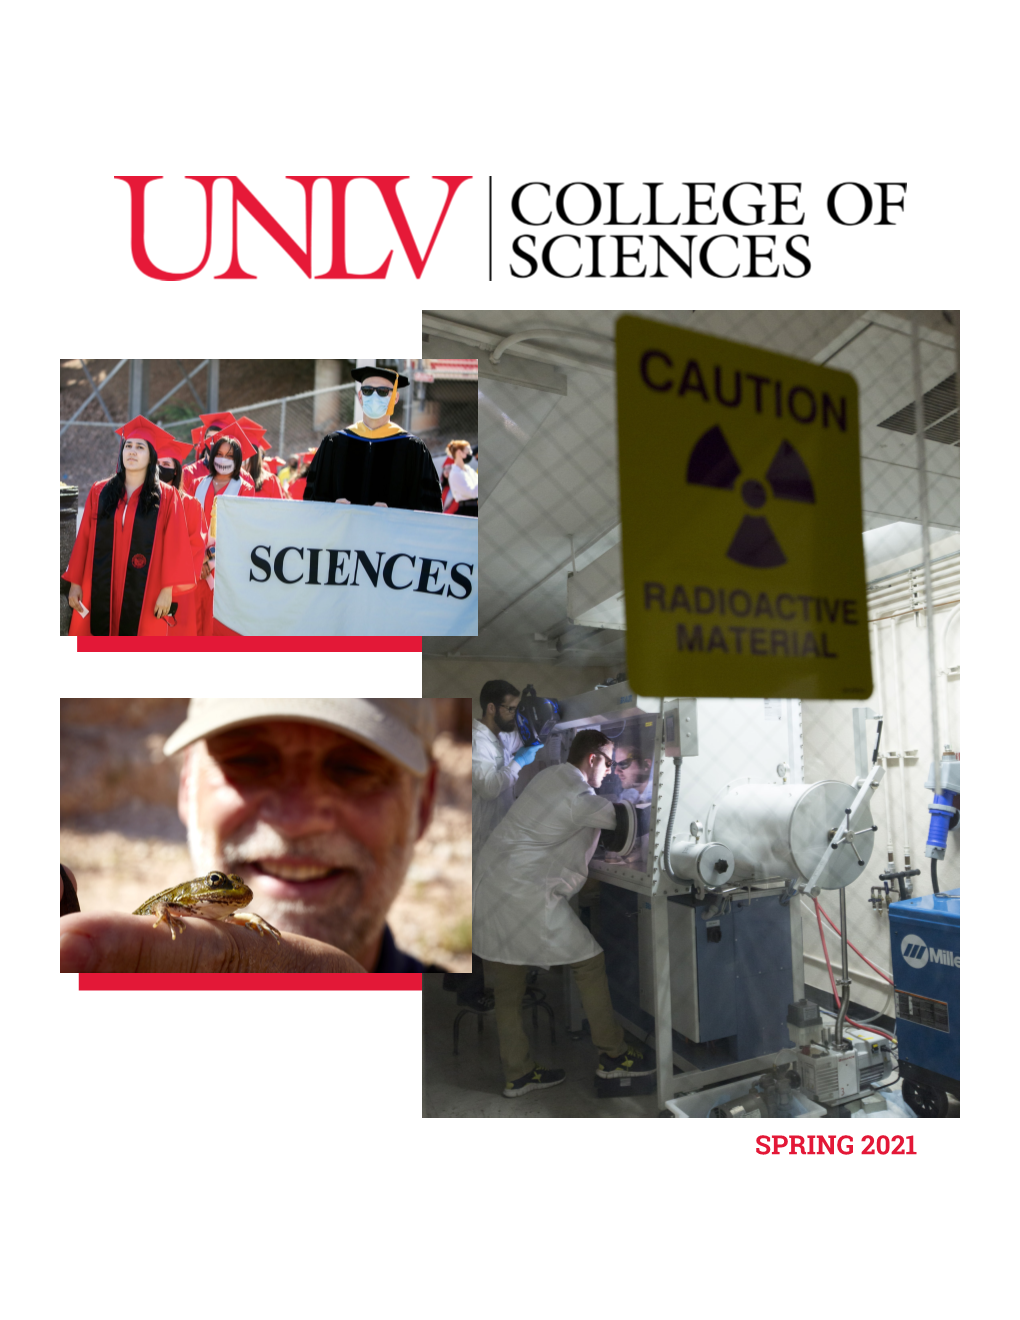 UNLV College of Sciences Spring 2021 Newsletter